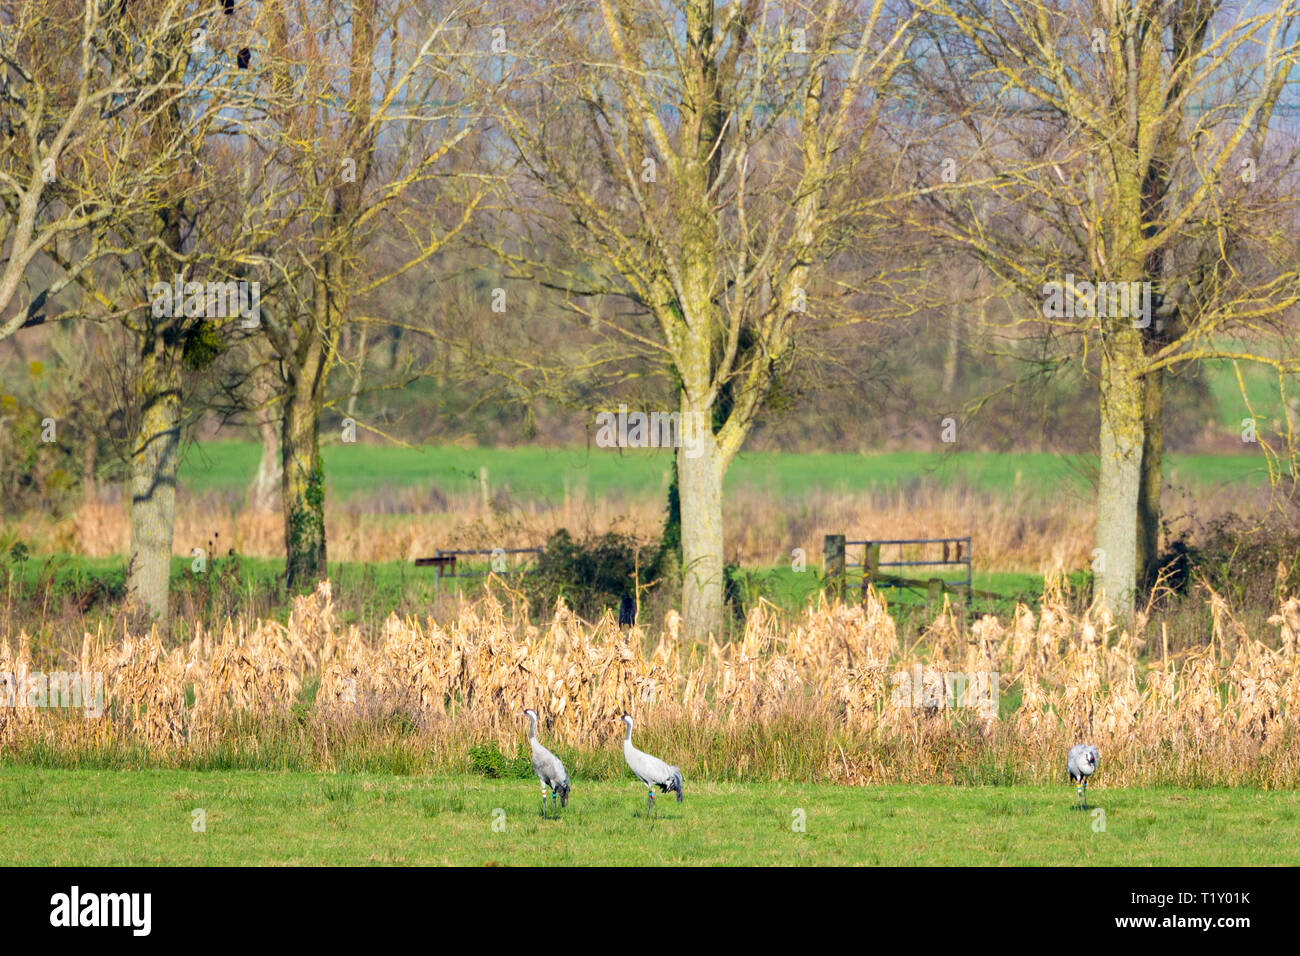 Group of Cranes, Grus grus, large birds walking in natural wetlands habitat in Somerset Levels marshes, UK Stock Photo